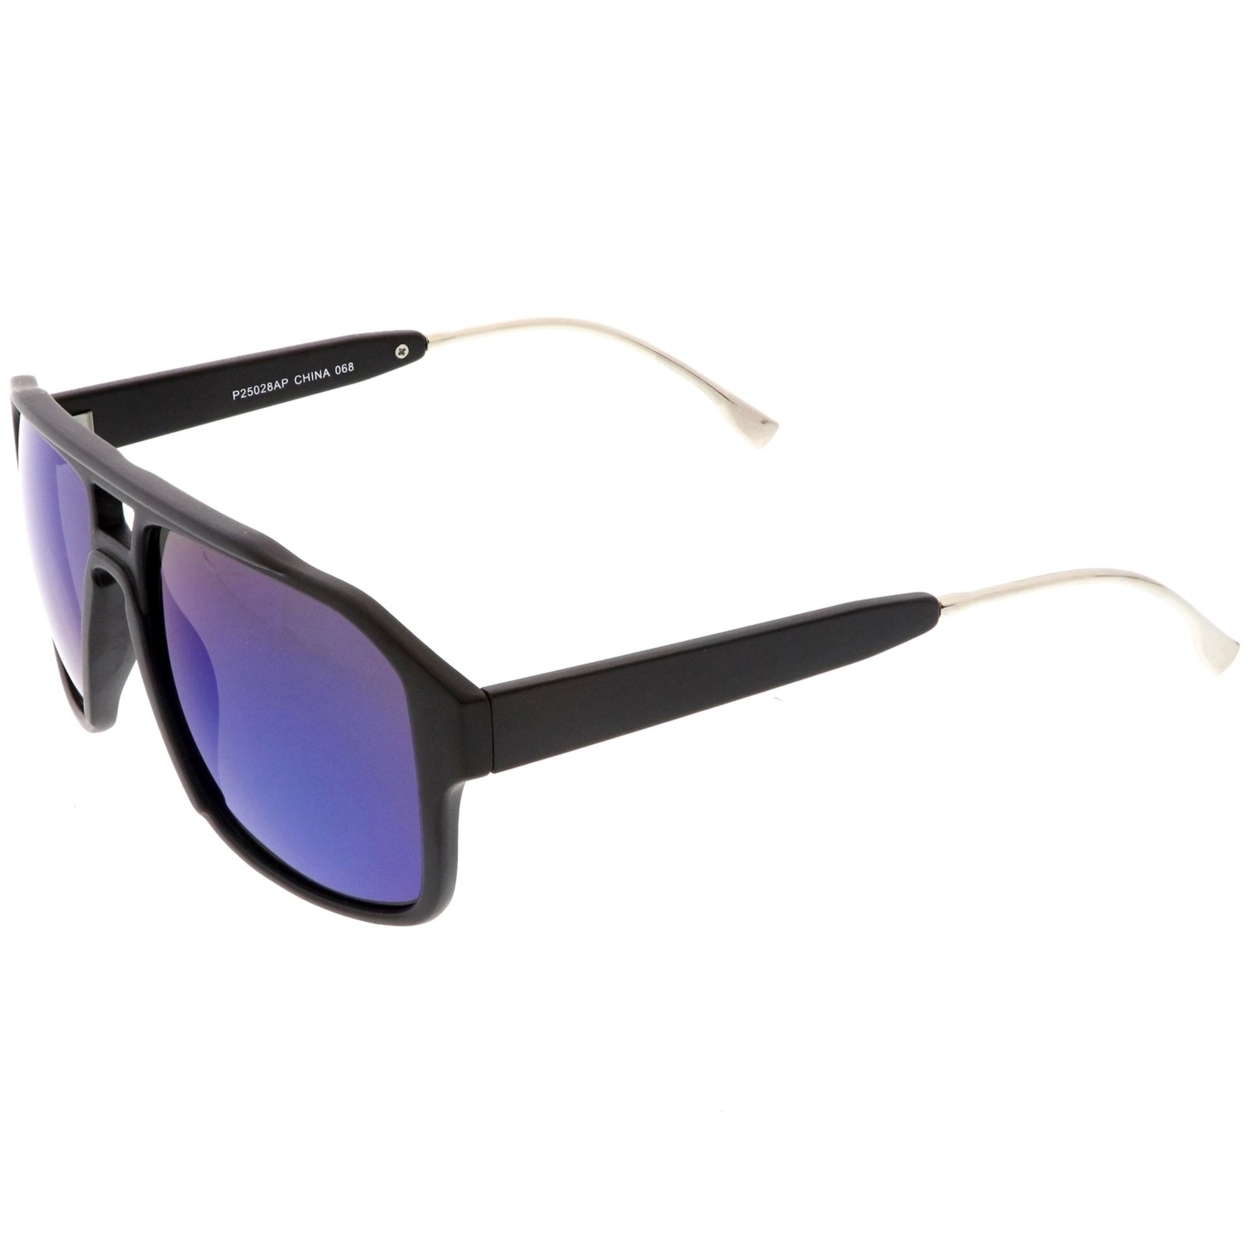 Sporty Aviator Sunglasses Flat Top Keyhole Nose Bridge Square Mirrored Lens 55mm - Matte Black / Silver Mirror